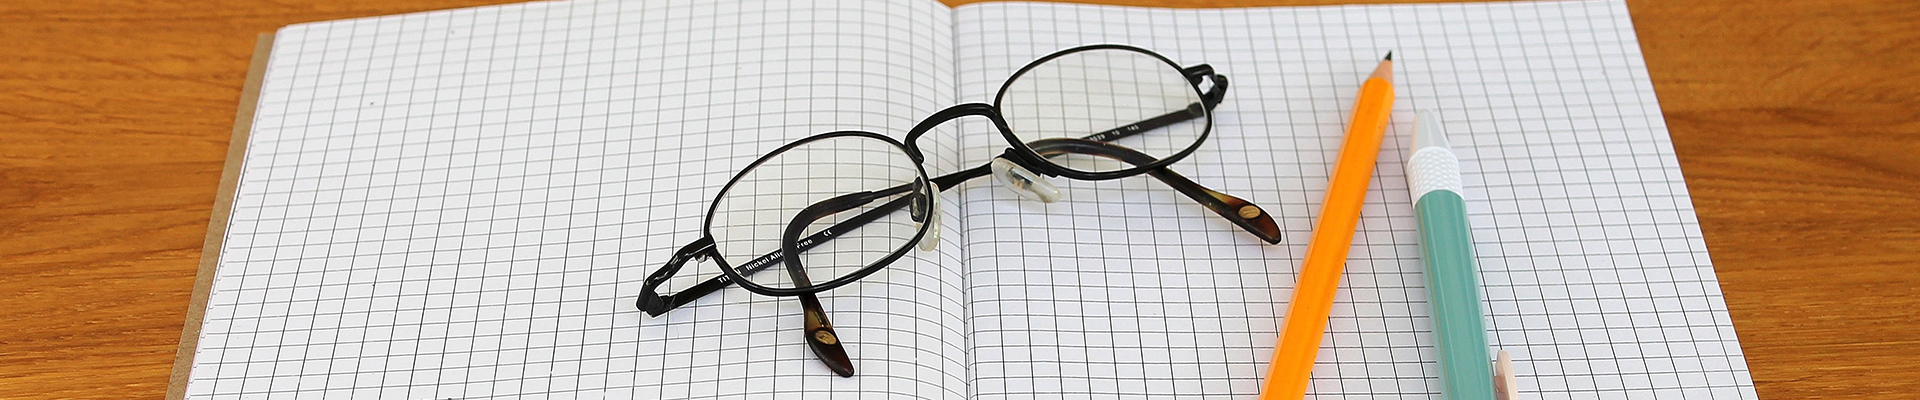 reading eyeglasses